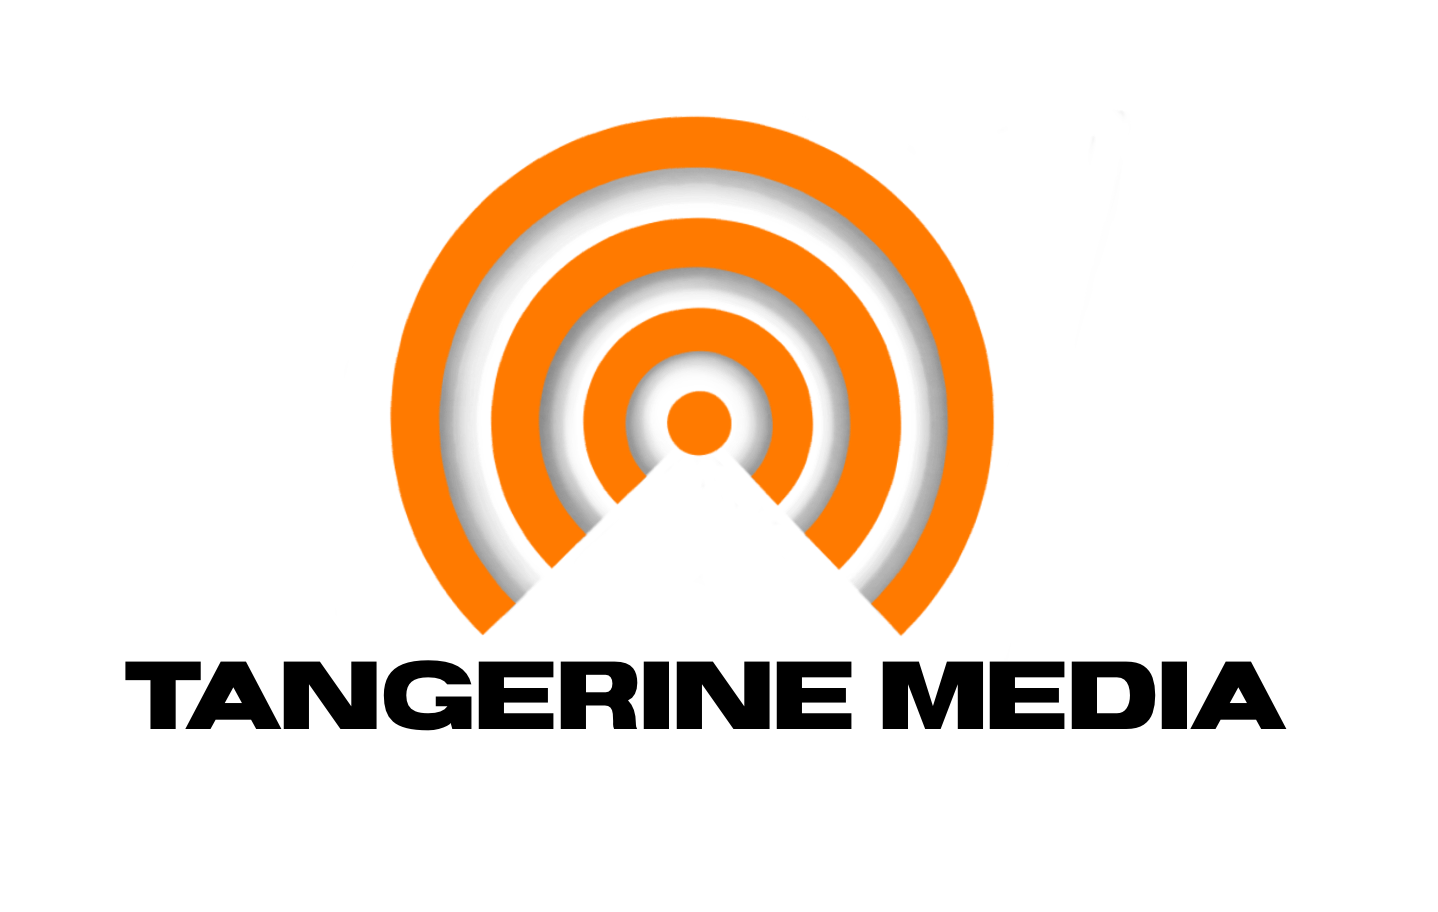 Tangerine media logo